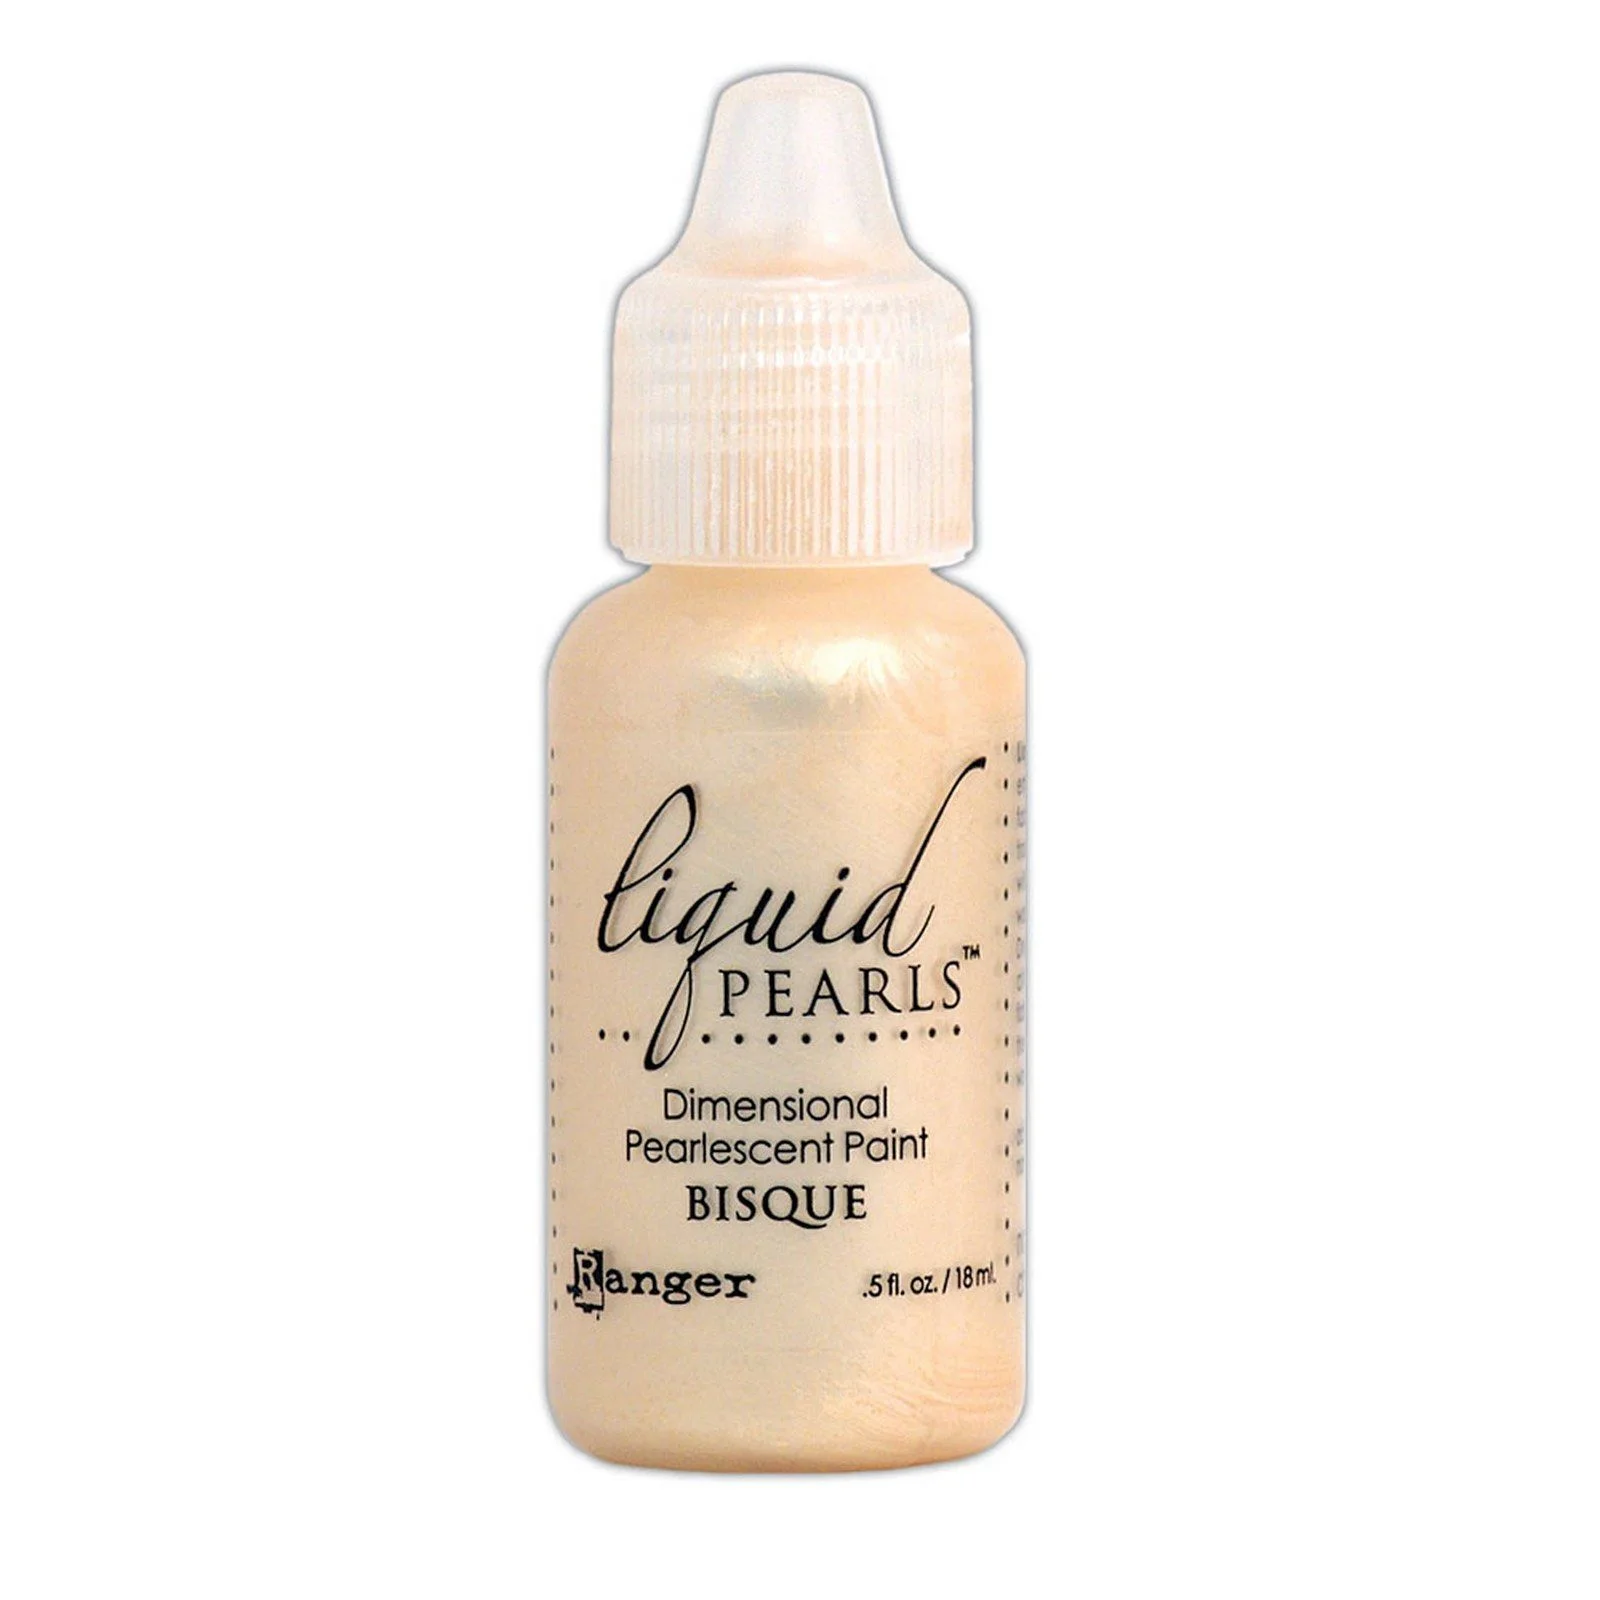 Ranger • Liquid pearls 14g bisque